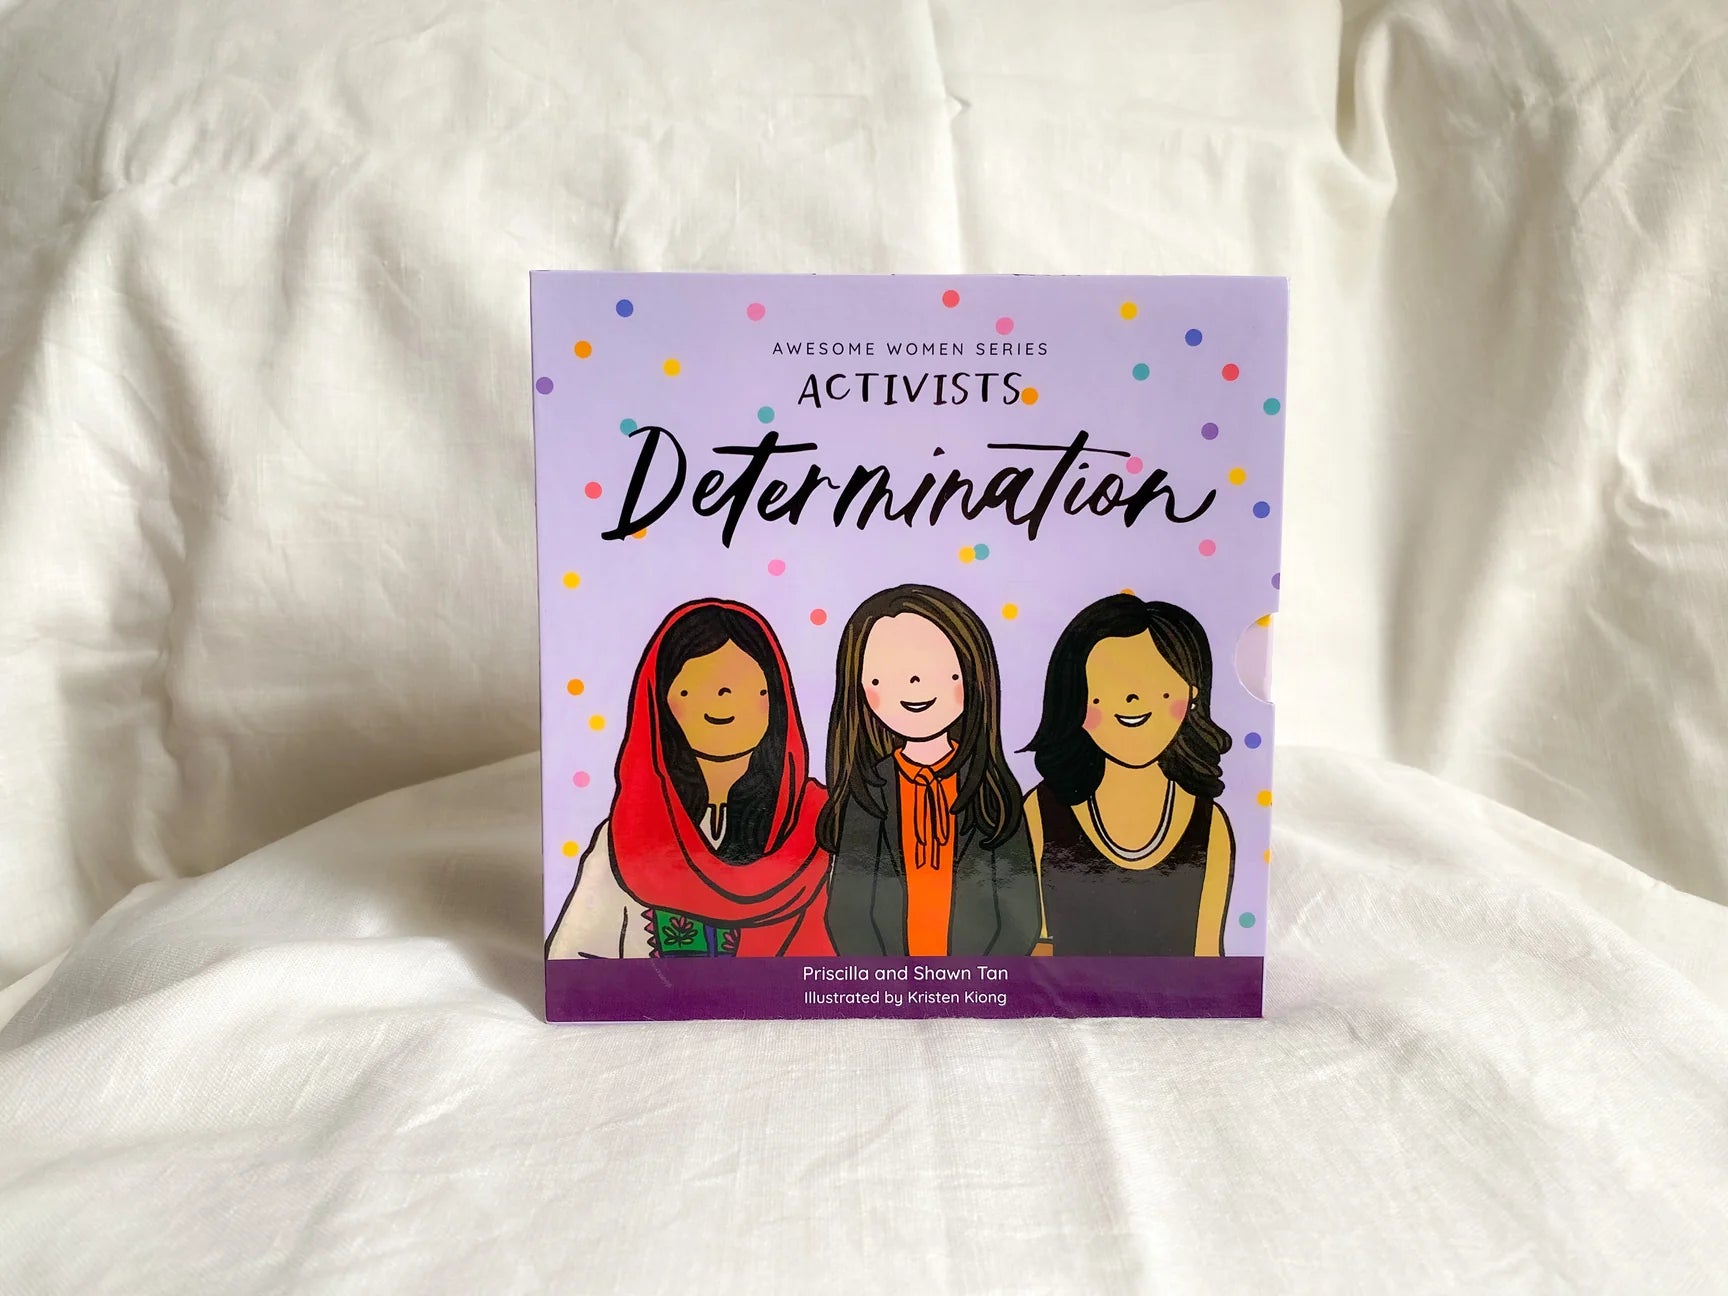 Awesome Women Series Activists | Determination (Malala Yousafzai, Melinda French Gates, Michelle Yeoh)